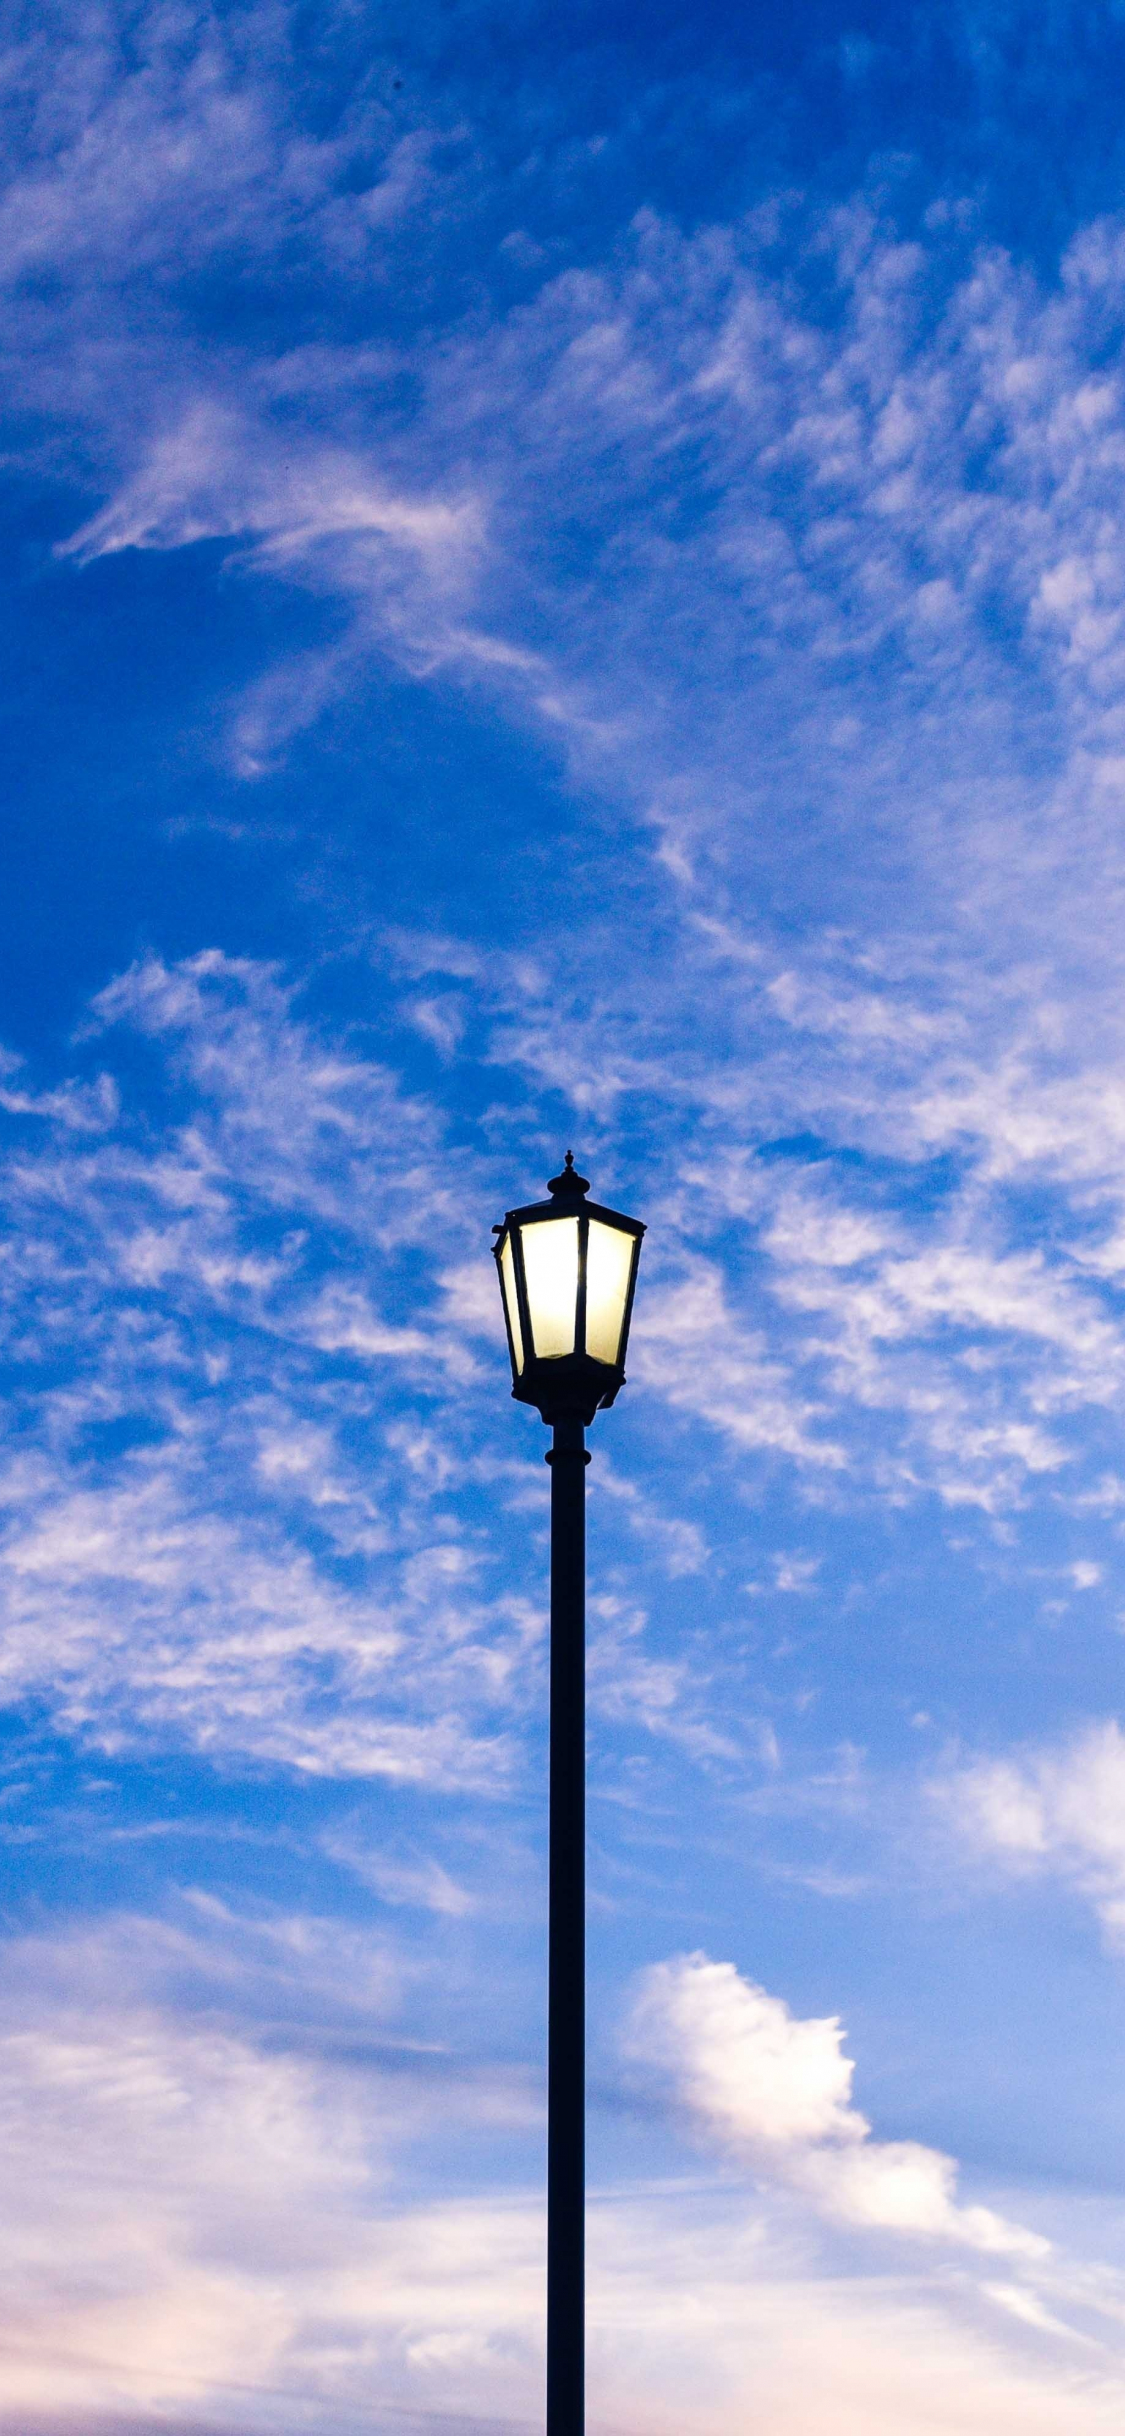 Download 1125x2436 wallpaper street light, blue sky, iphone x 1125x2436 HD image, background, 19653